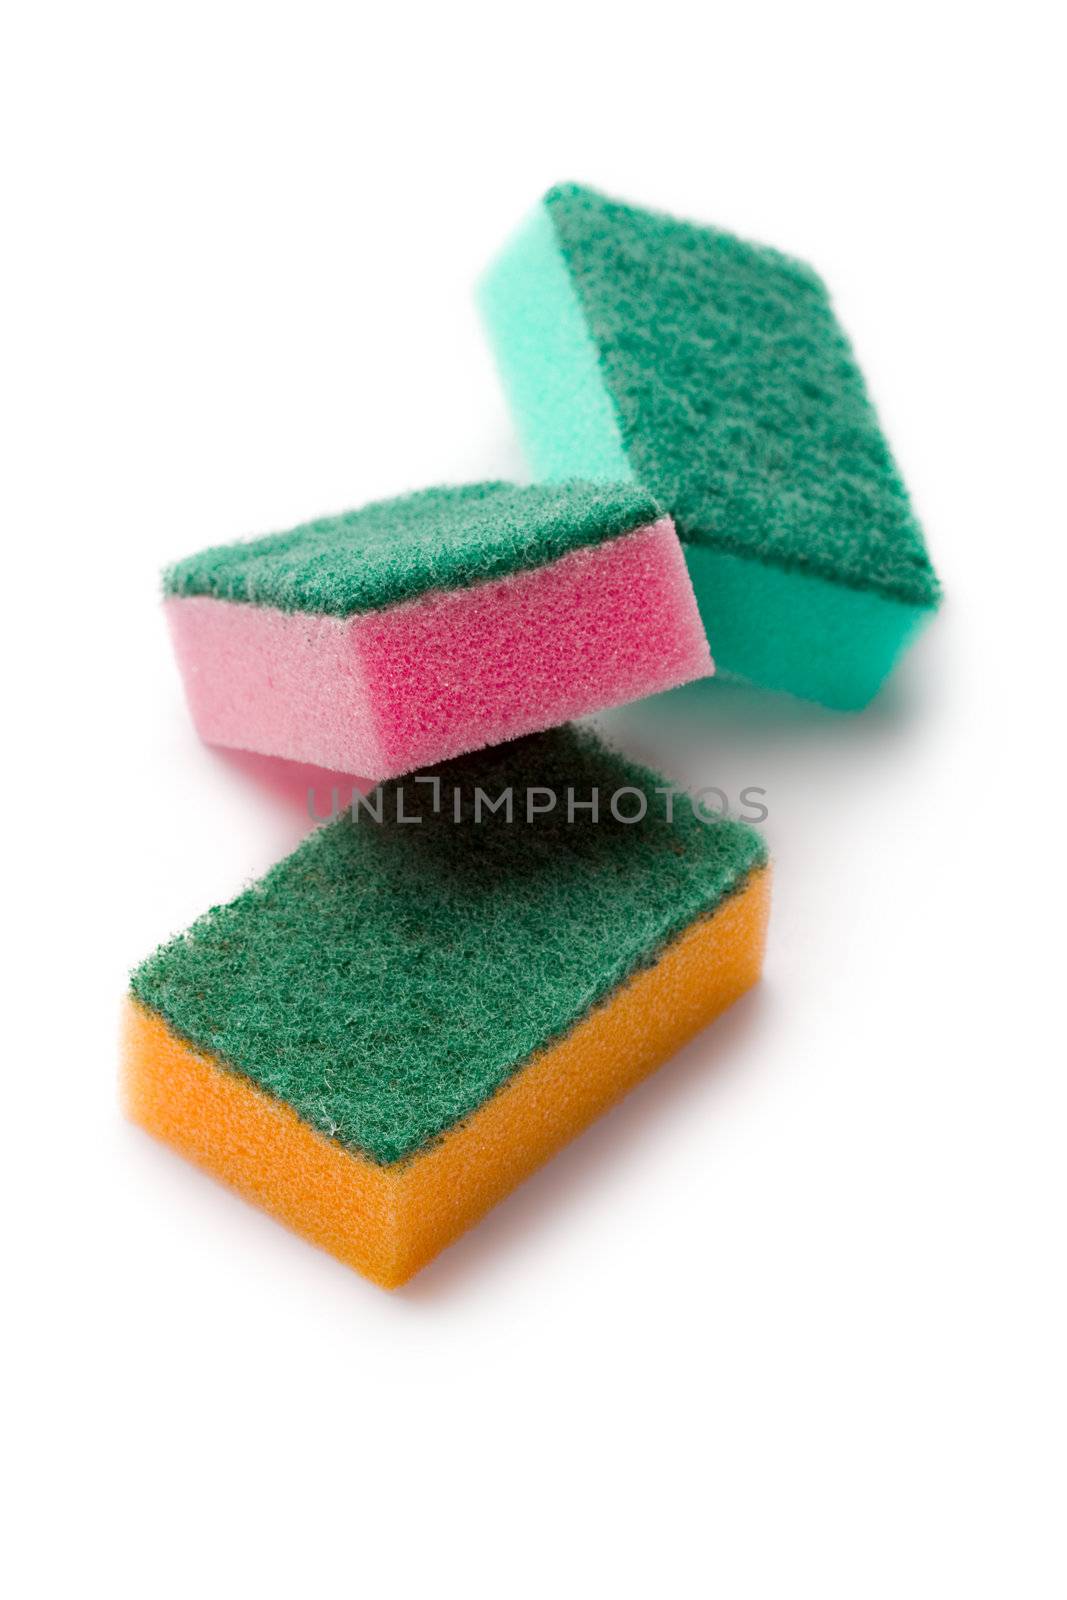 Sponges isolated on white by Garsya